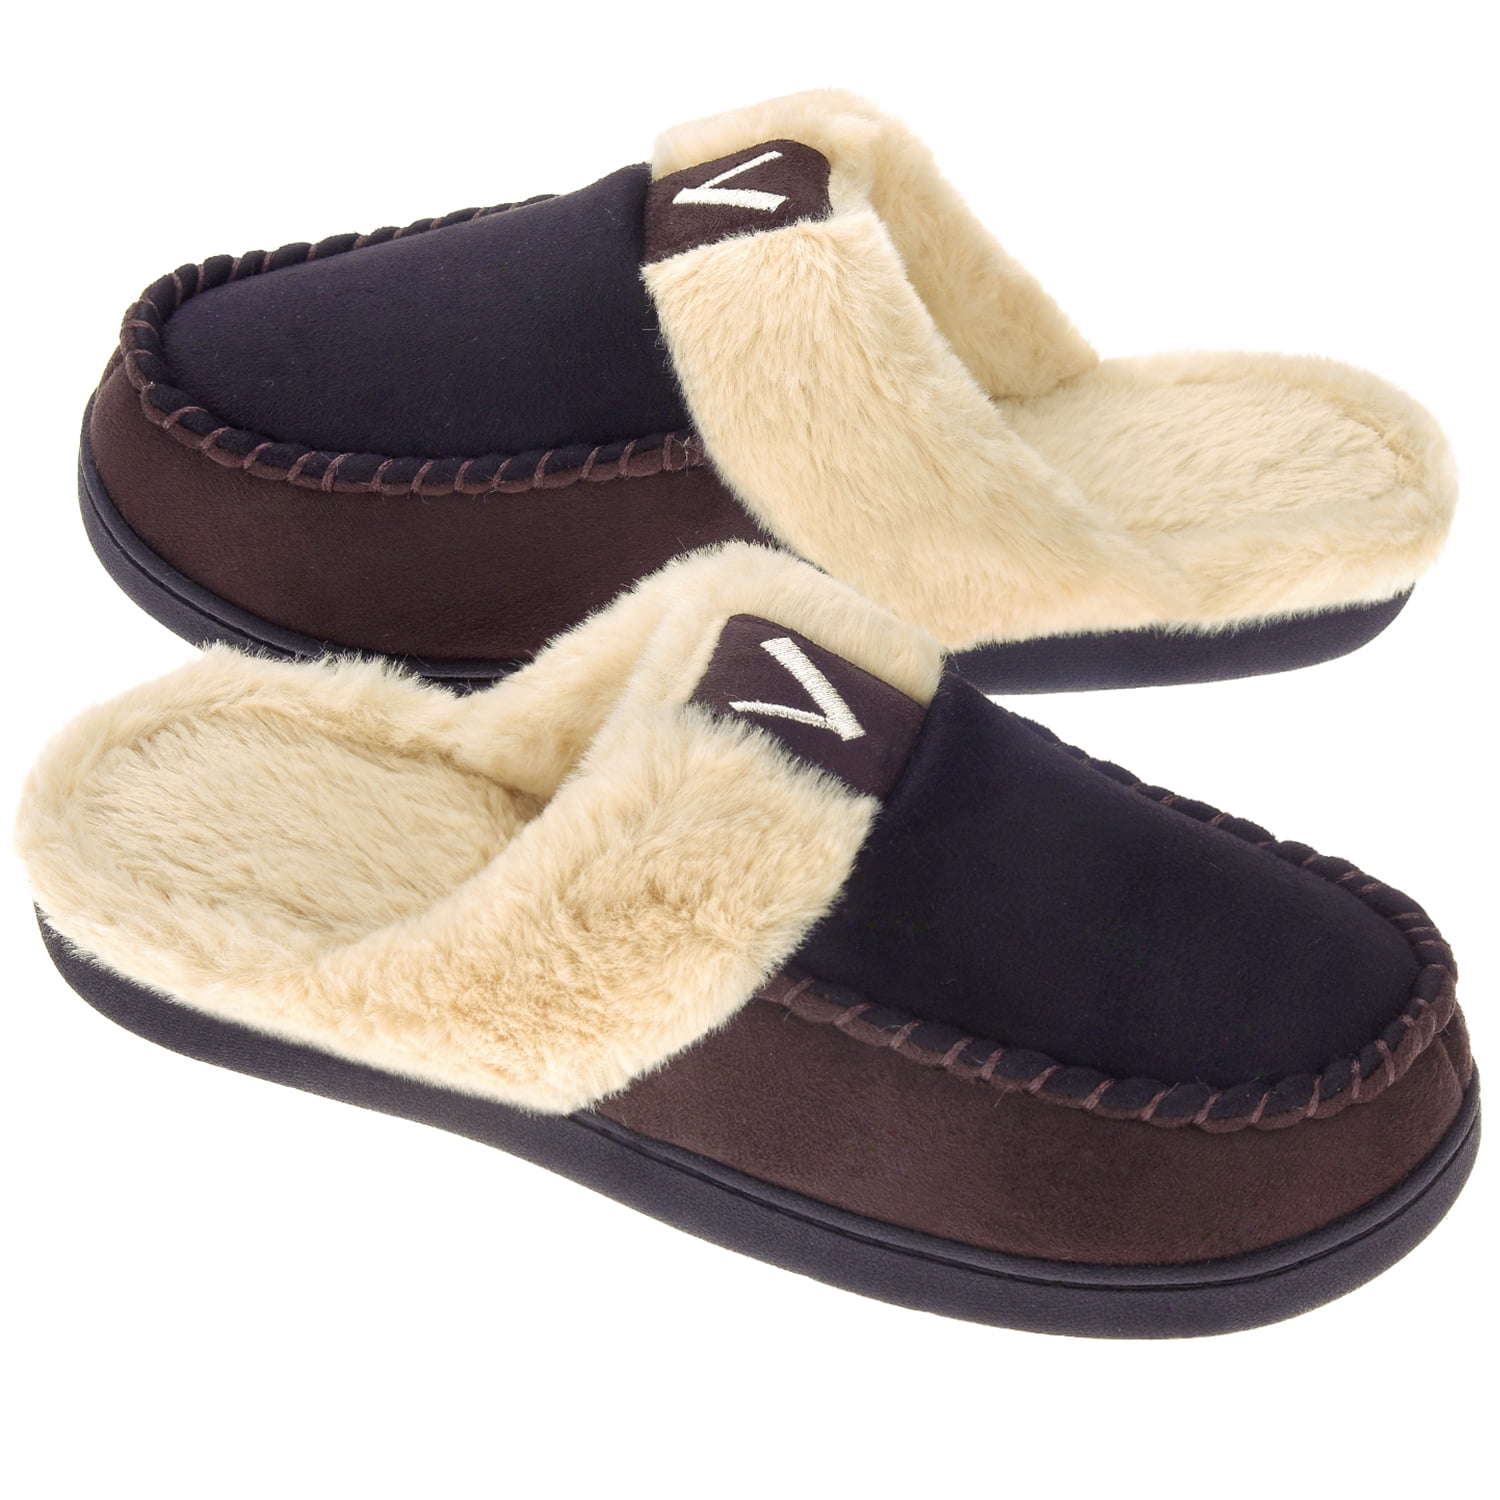 Men's Comfy Slippers Moccasin Style Scuff Indoor Outdoor - Walmart.com